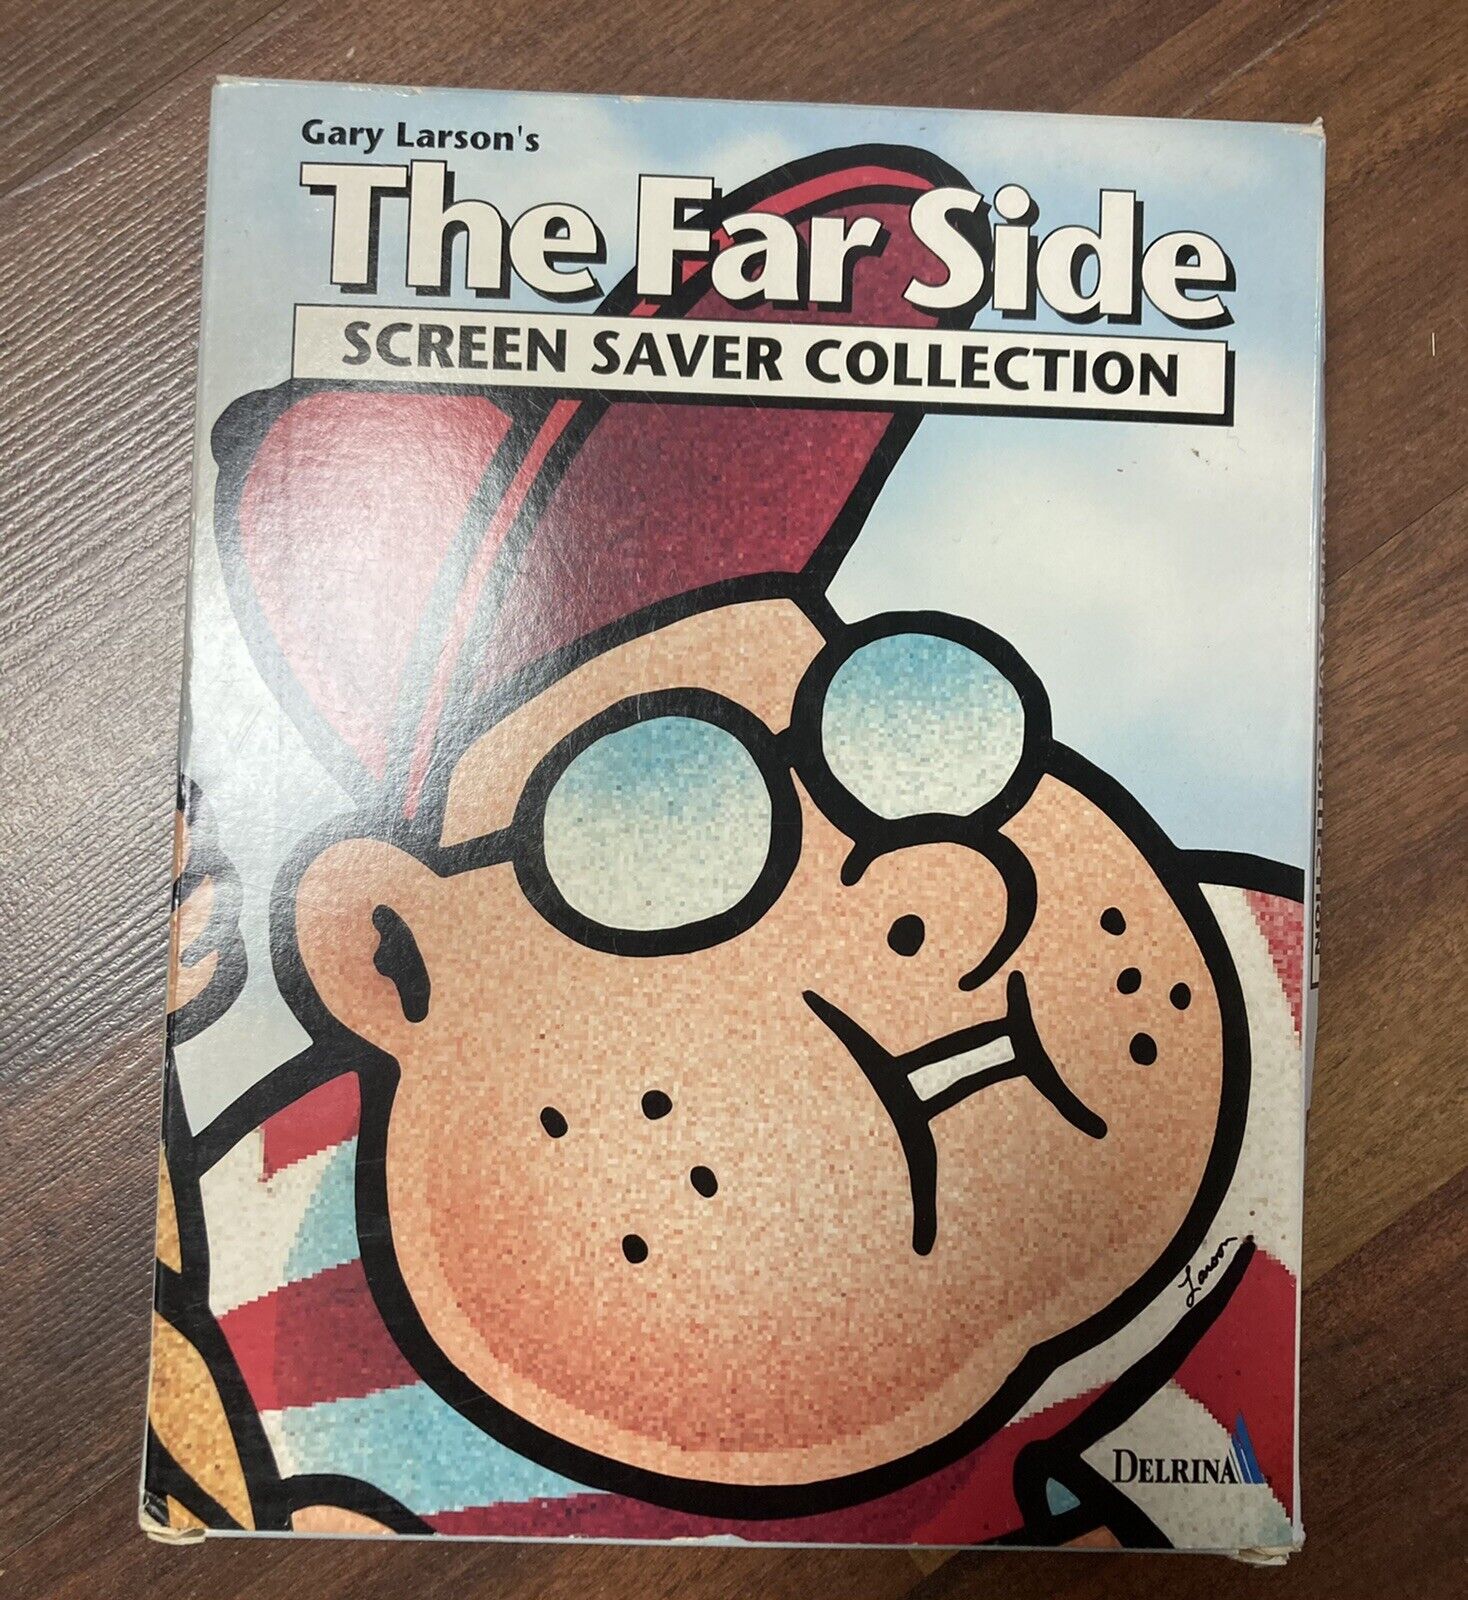 The Far Side: Screen Saver Collection - Gary Larson, Delrina 1994 Vintage